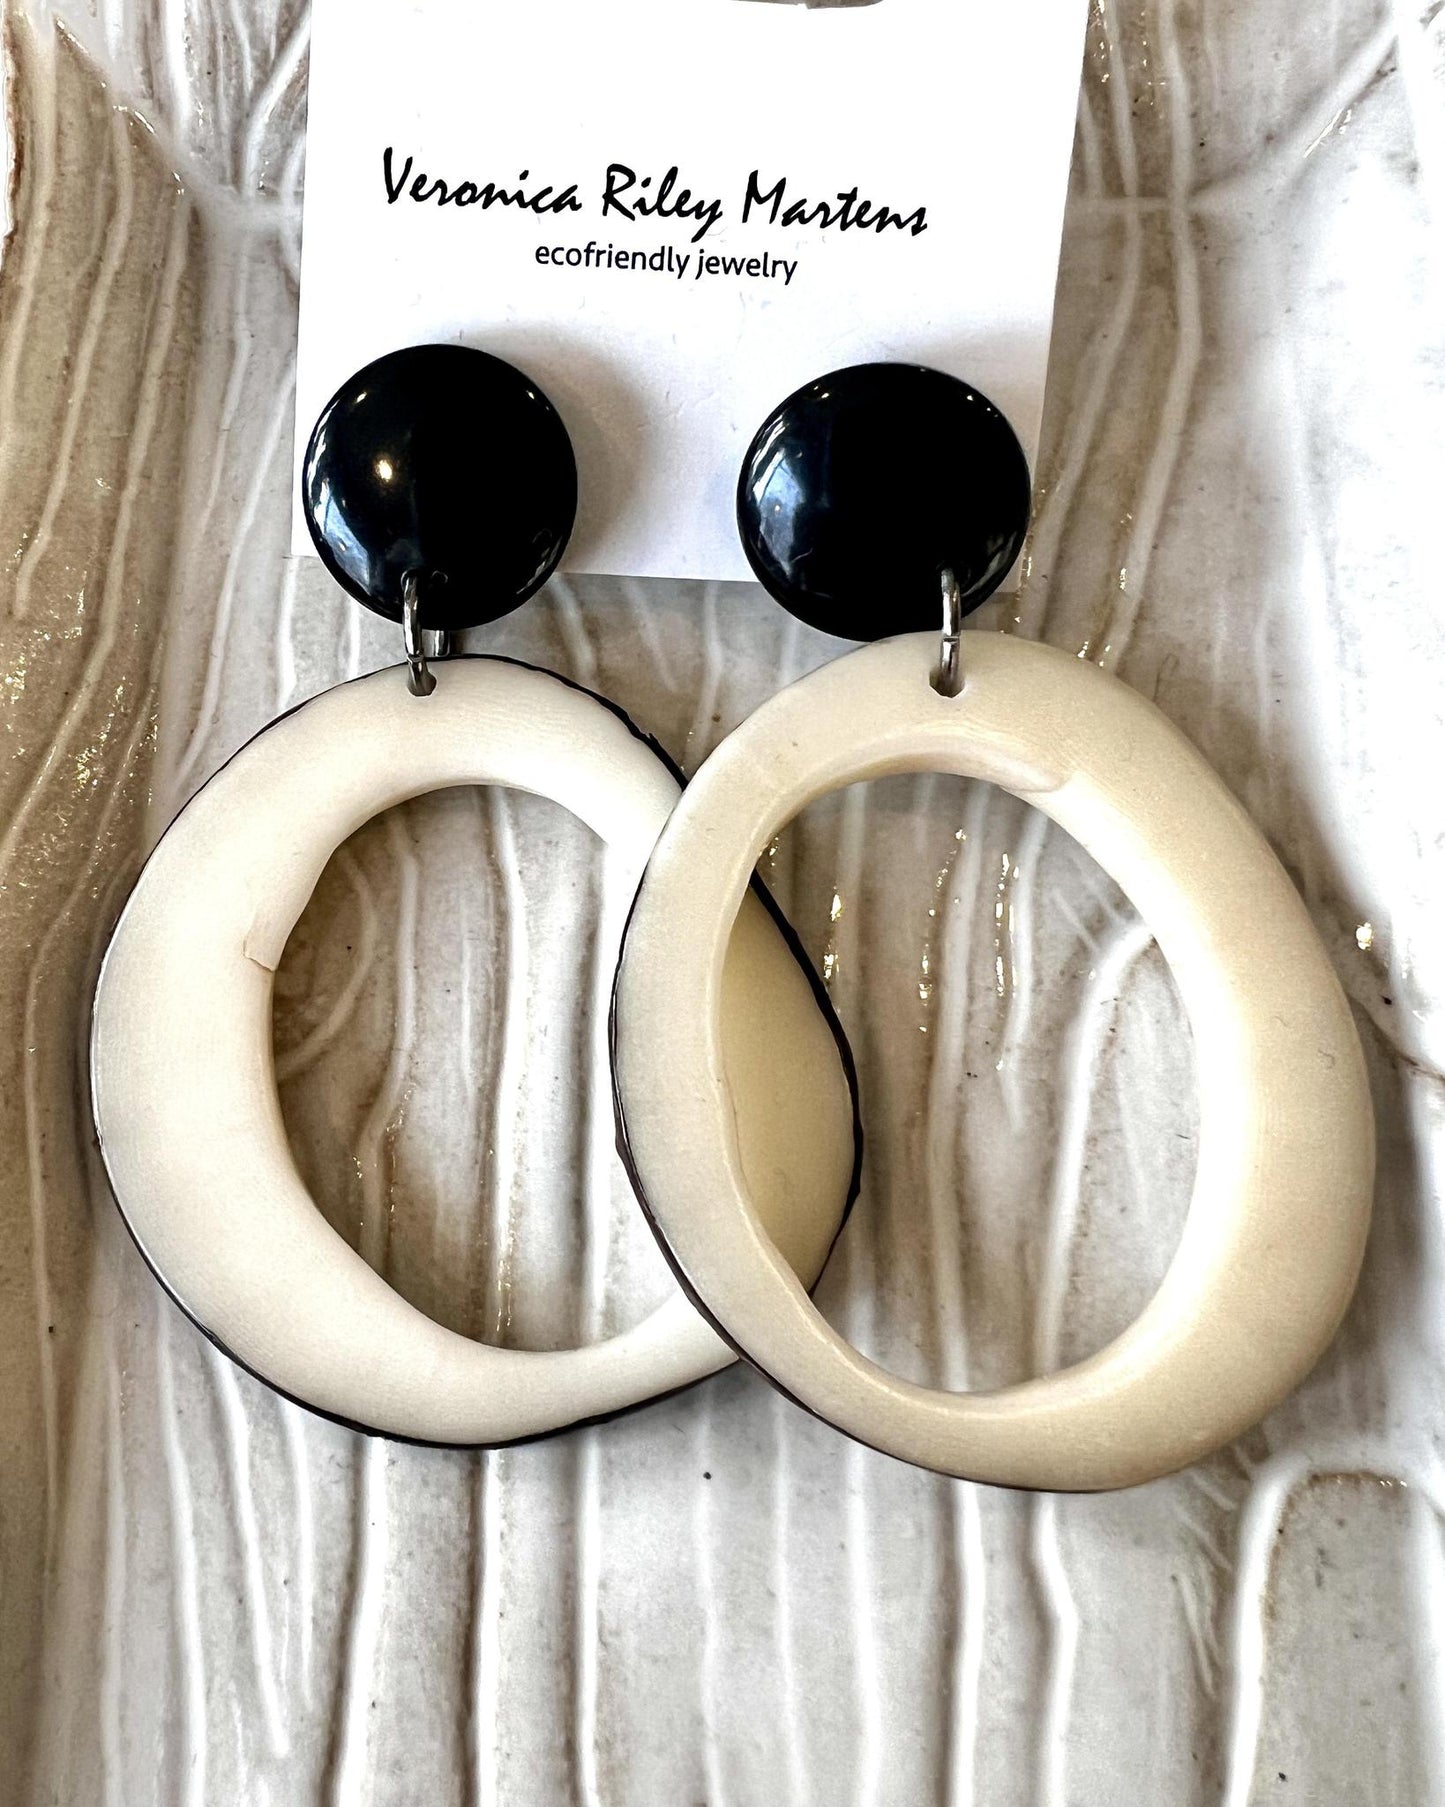 Veronica Riley Martens 2-piece Tagua Nut Earrrings - Cream and Black